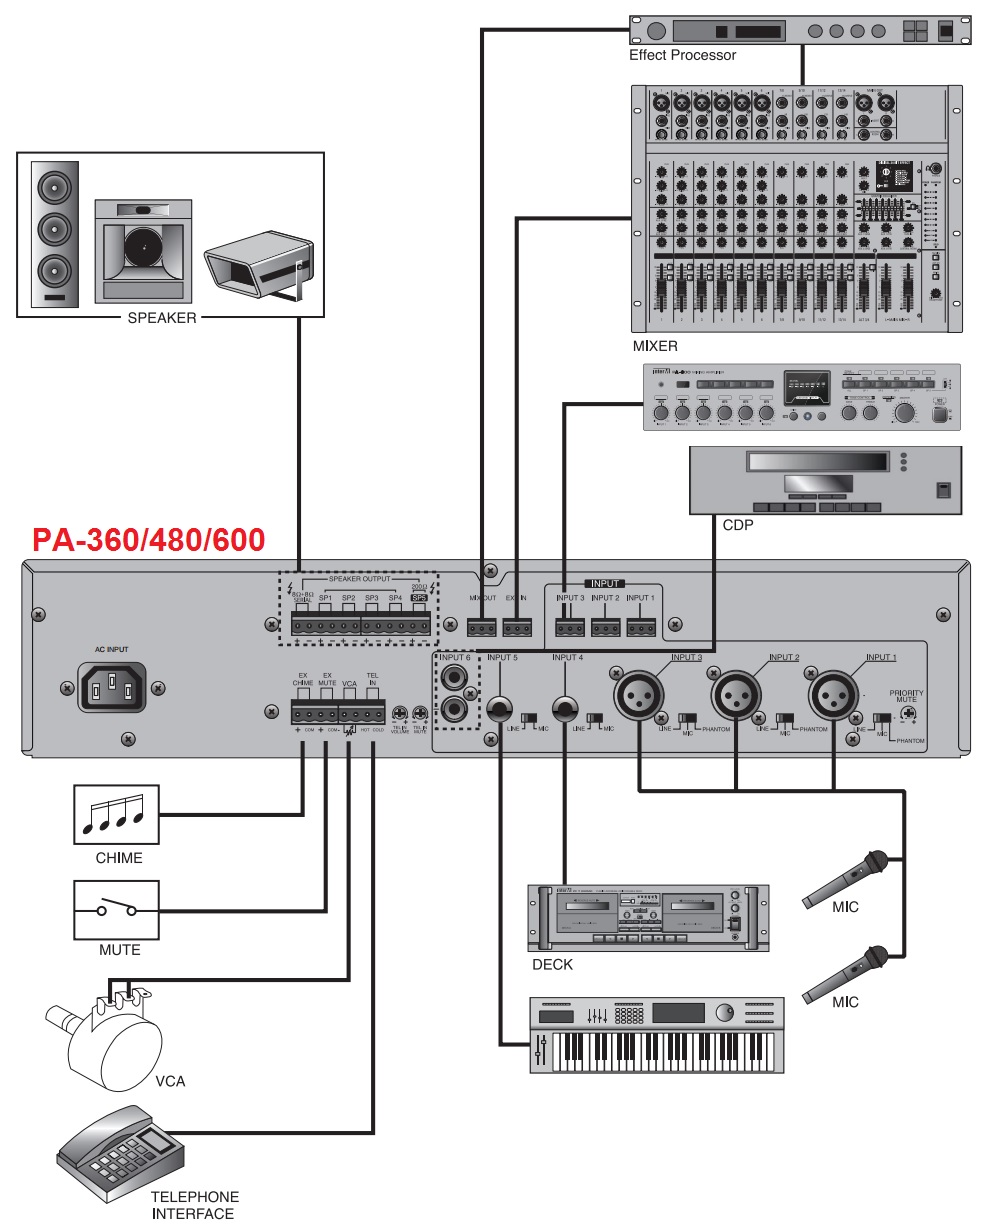 Схема подключения усилителей PA-360/480/600